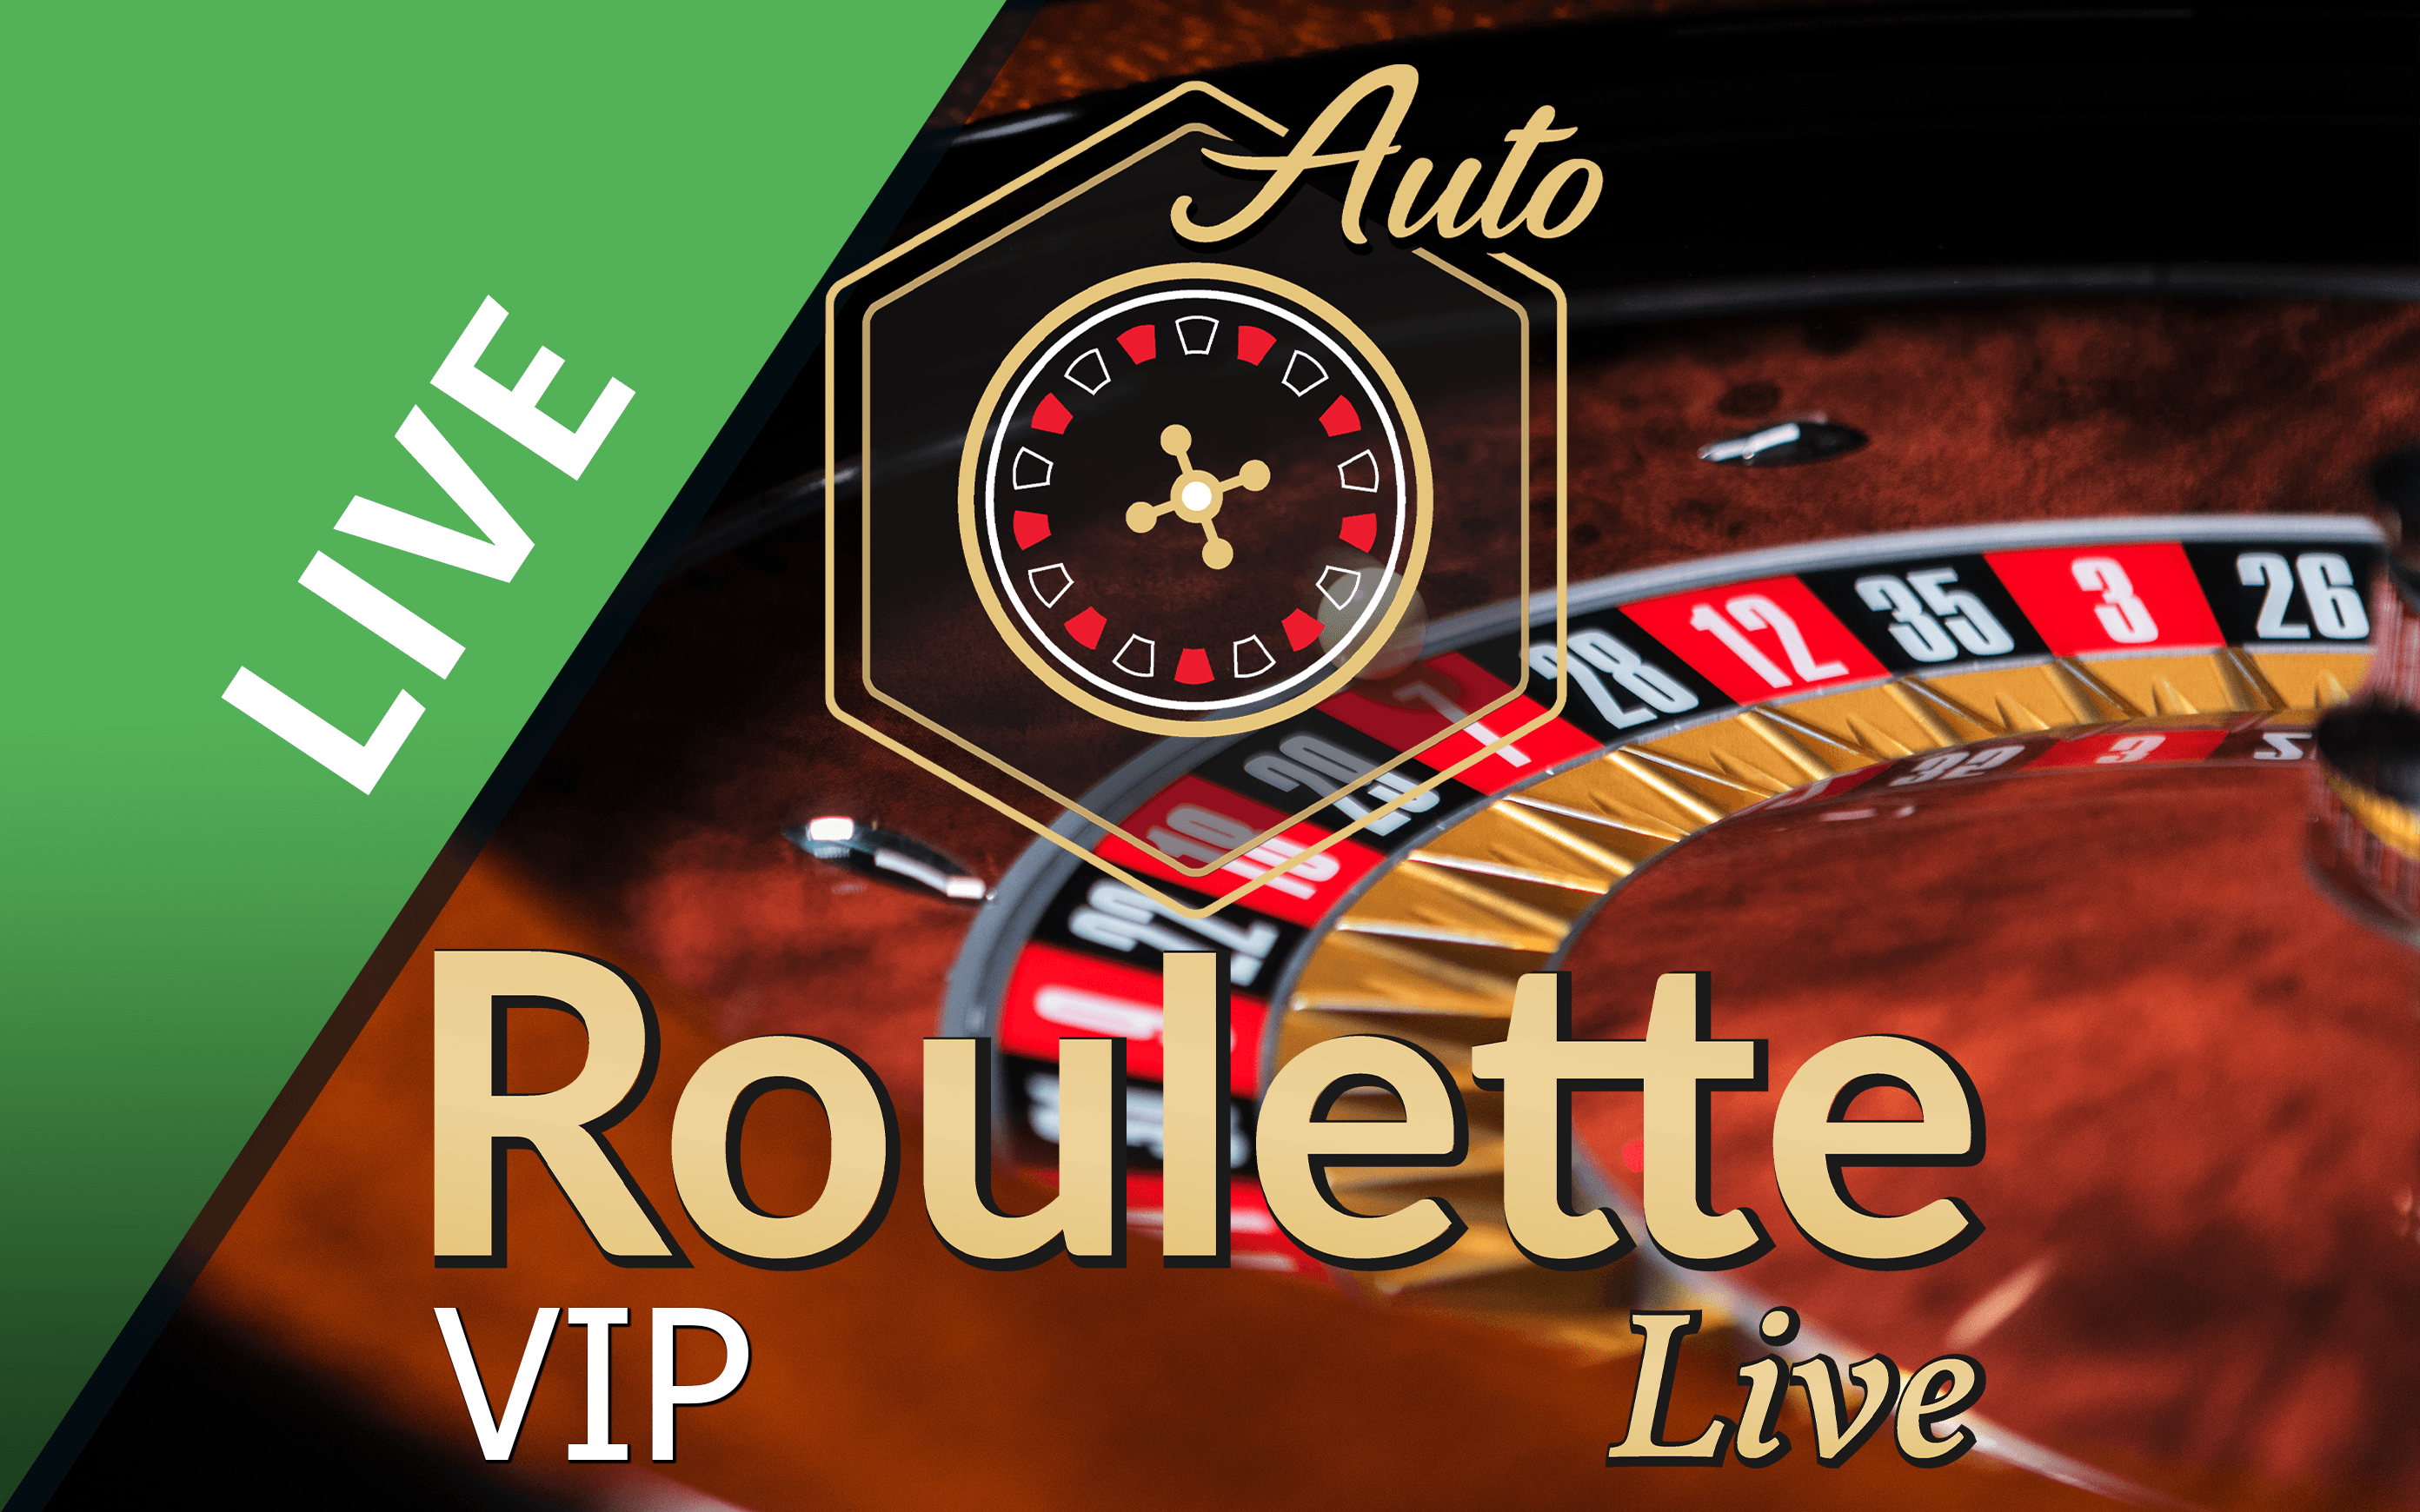 Play Auto Roulette VIP on Starcasino.be online casino